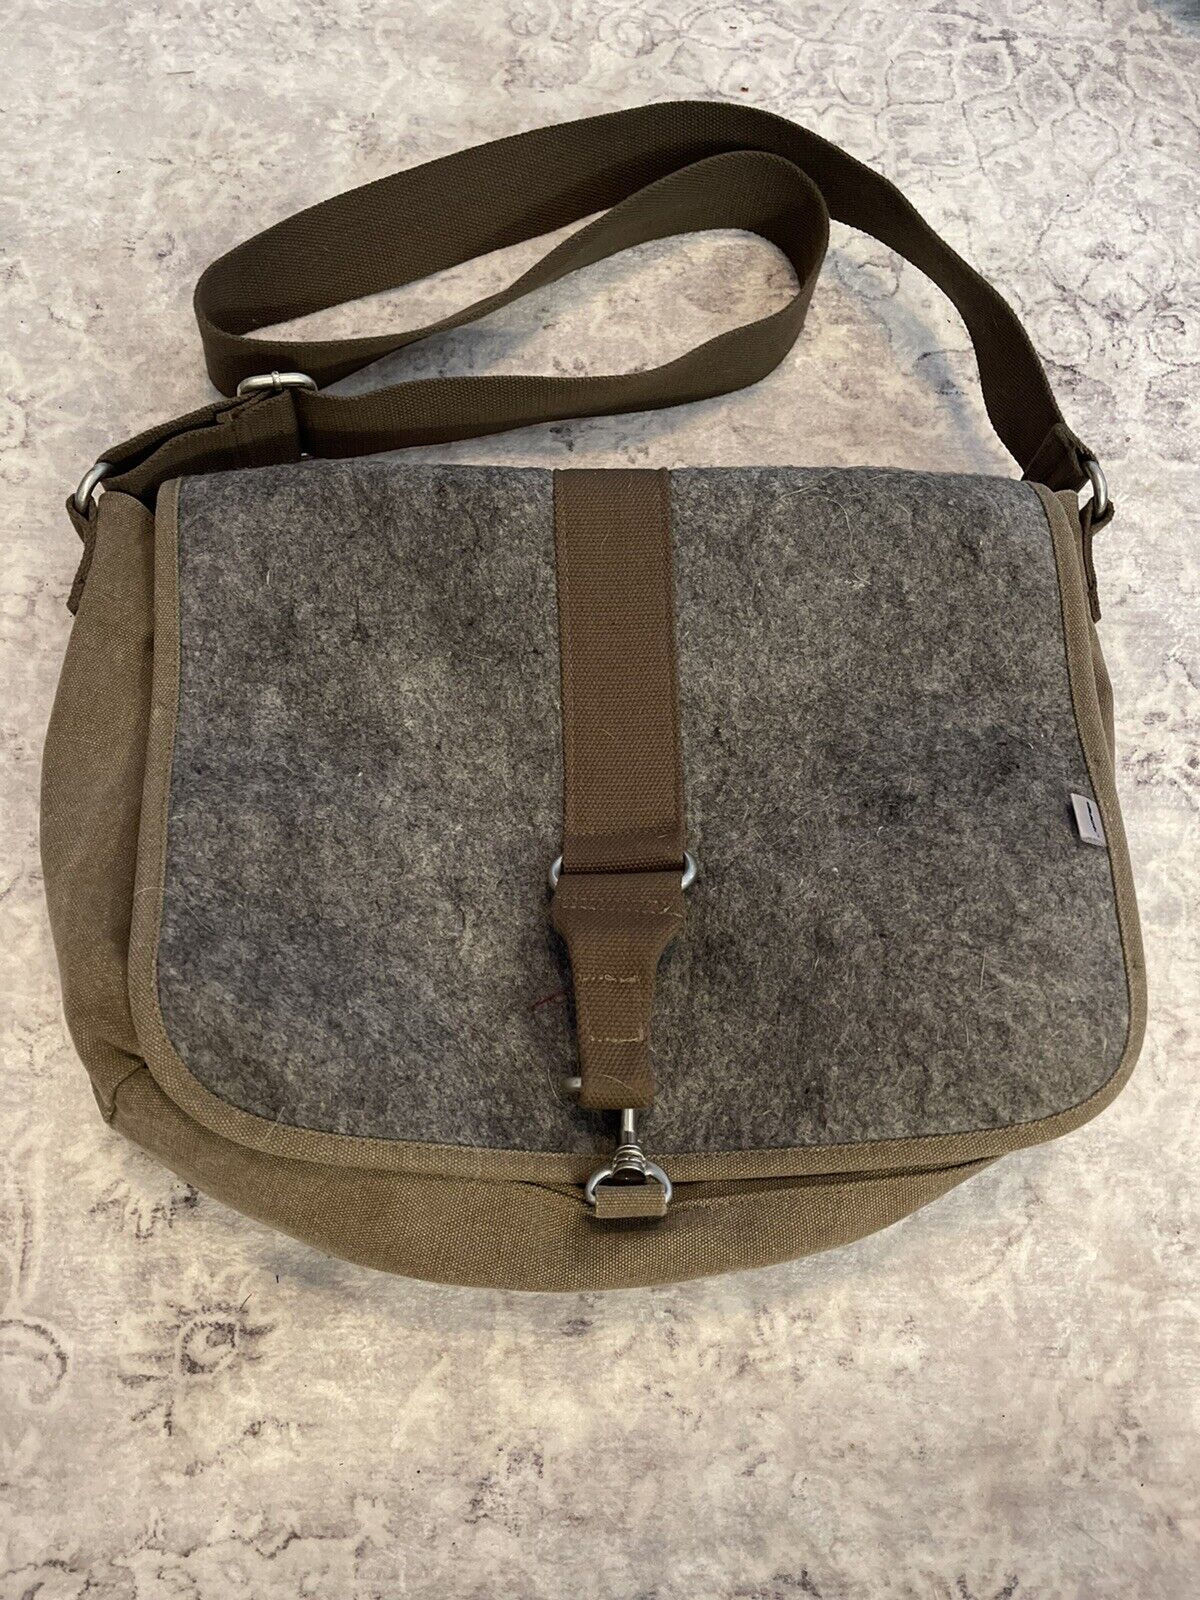 Ducti Large Gray with Khaki Canvas Flap Fabric Messenger Computer Travel Bag